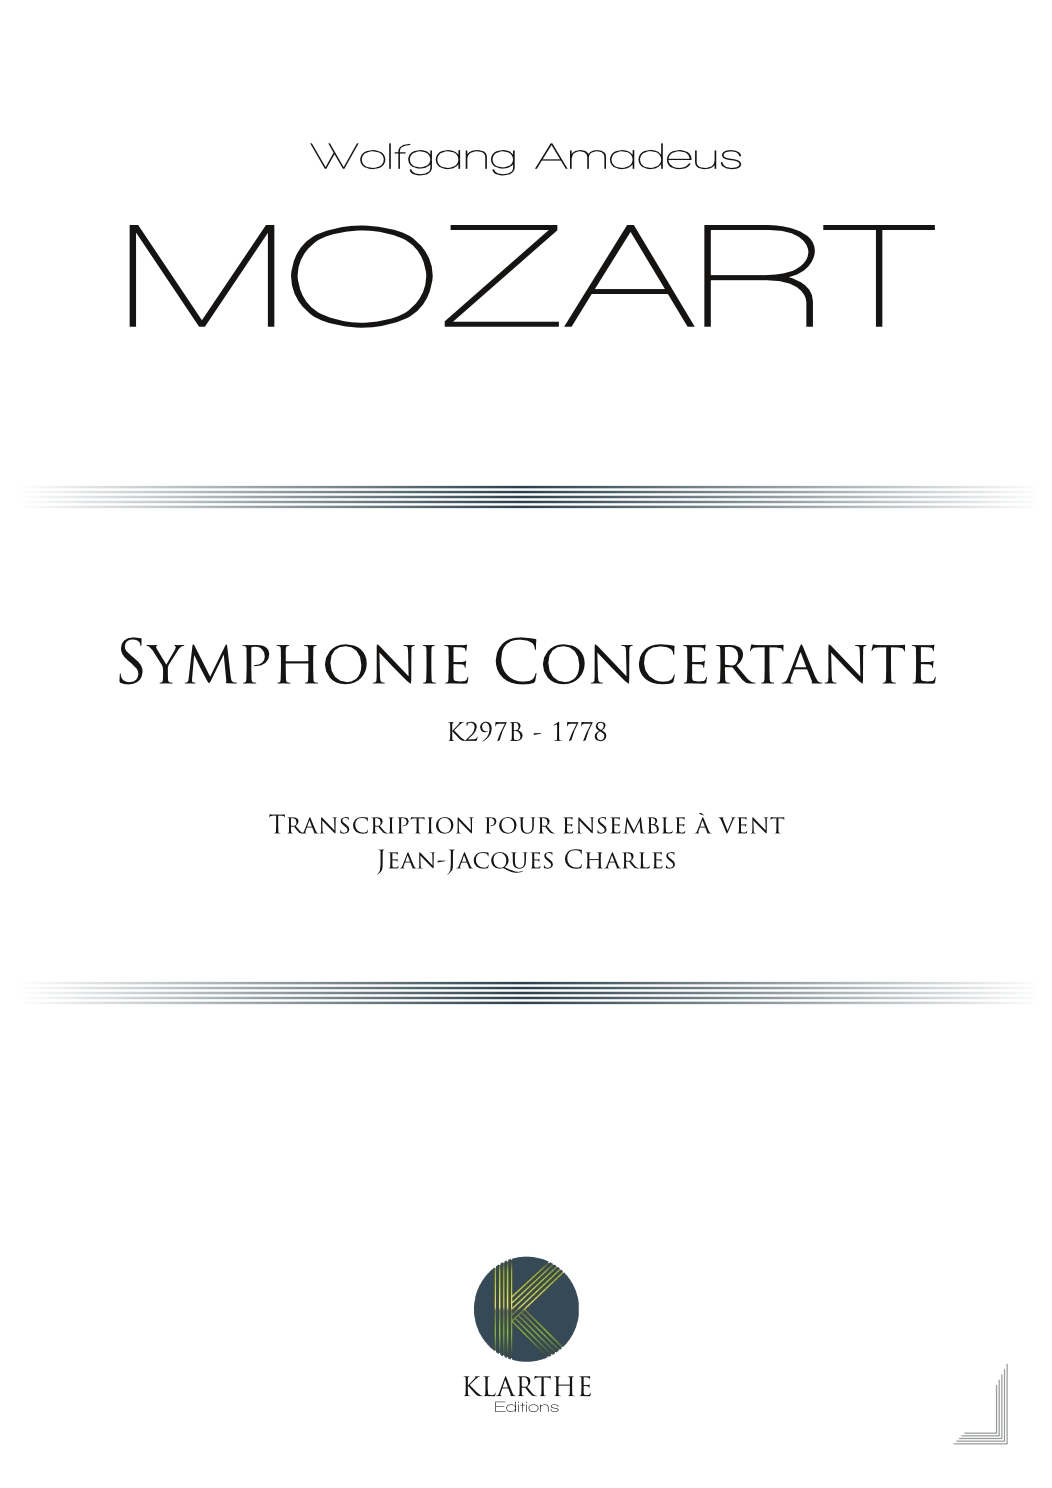 Symphonie Concertante K297B (MOZART WOLFGANG AMADEUS)